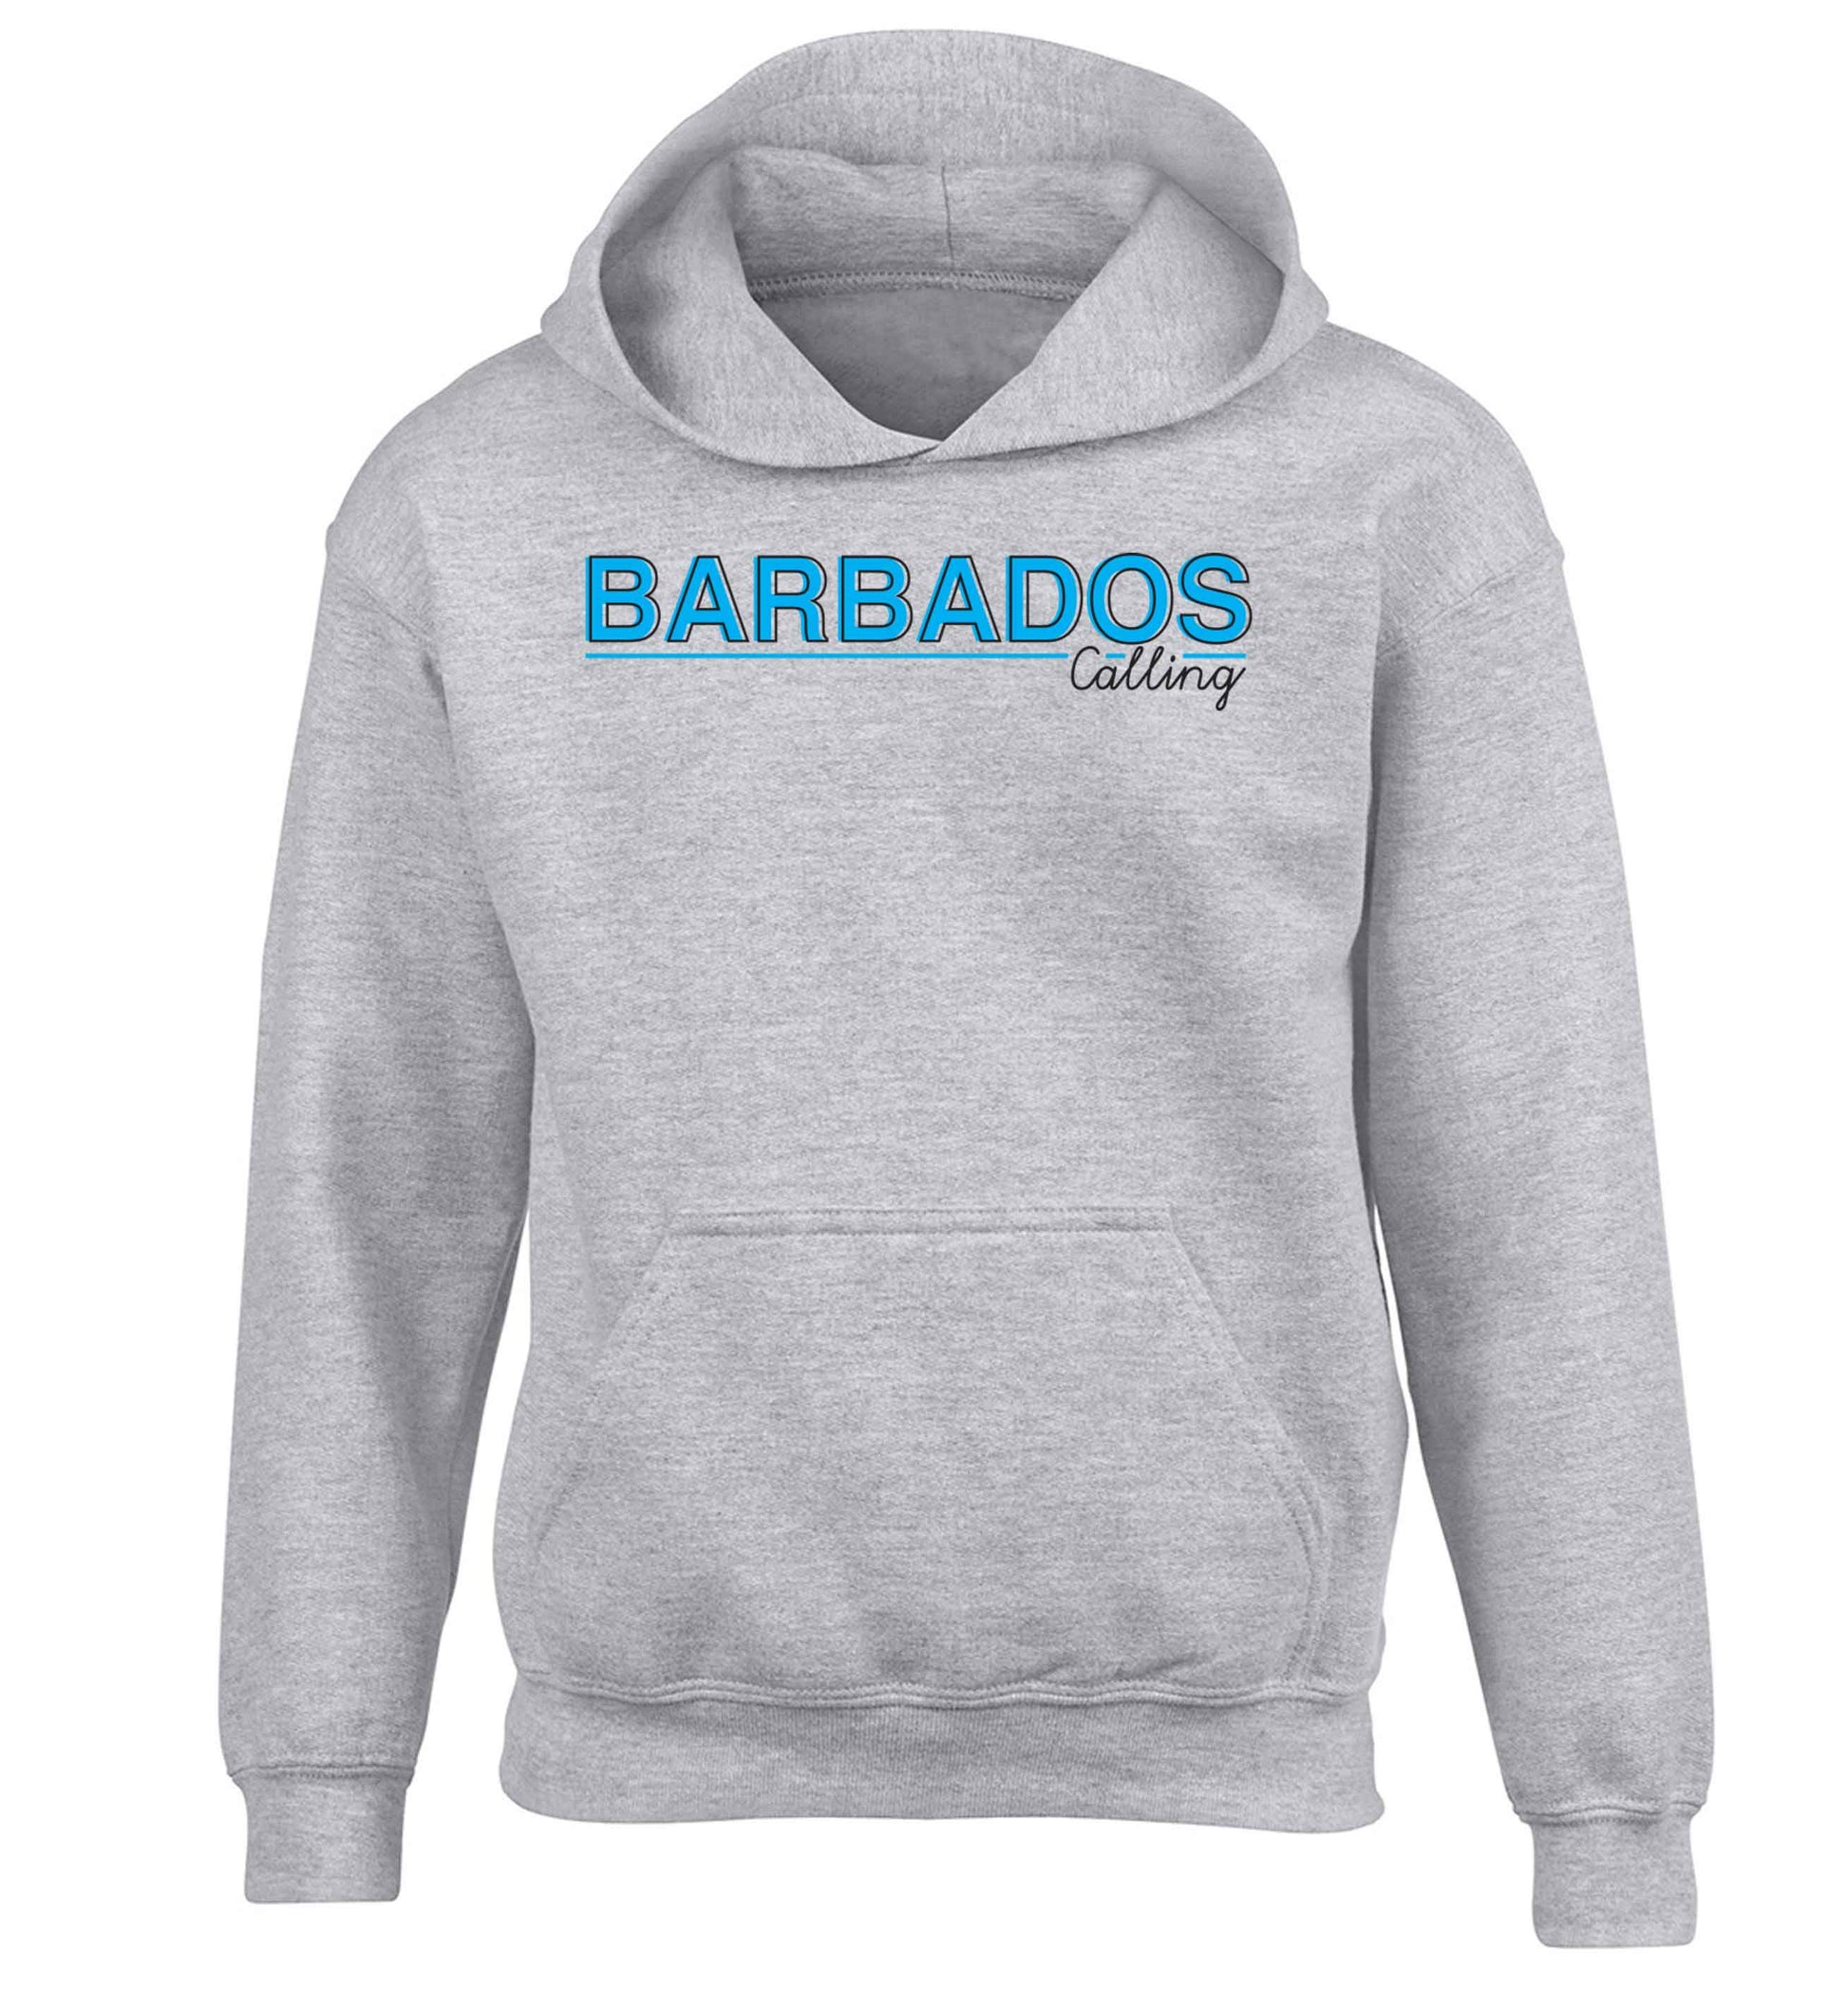 Barbados calling children's grey hoodie 12-13 Years